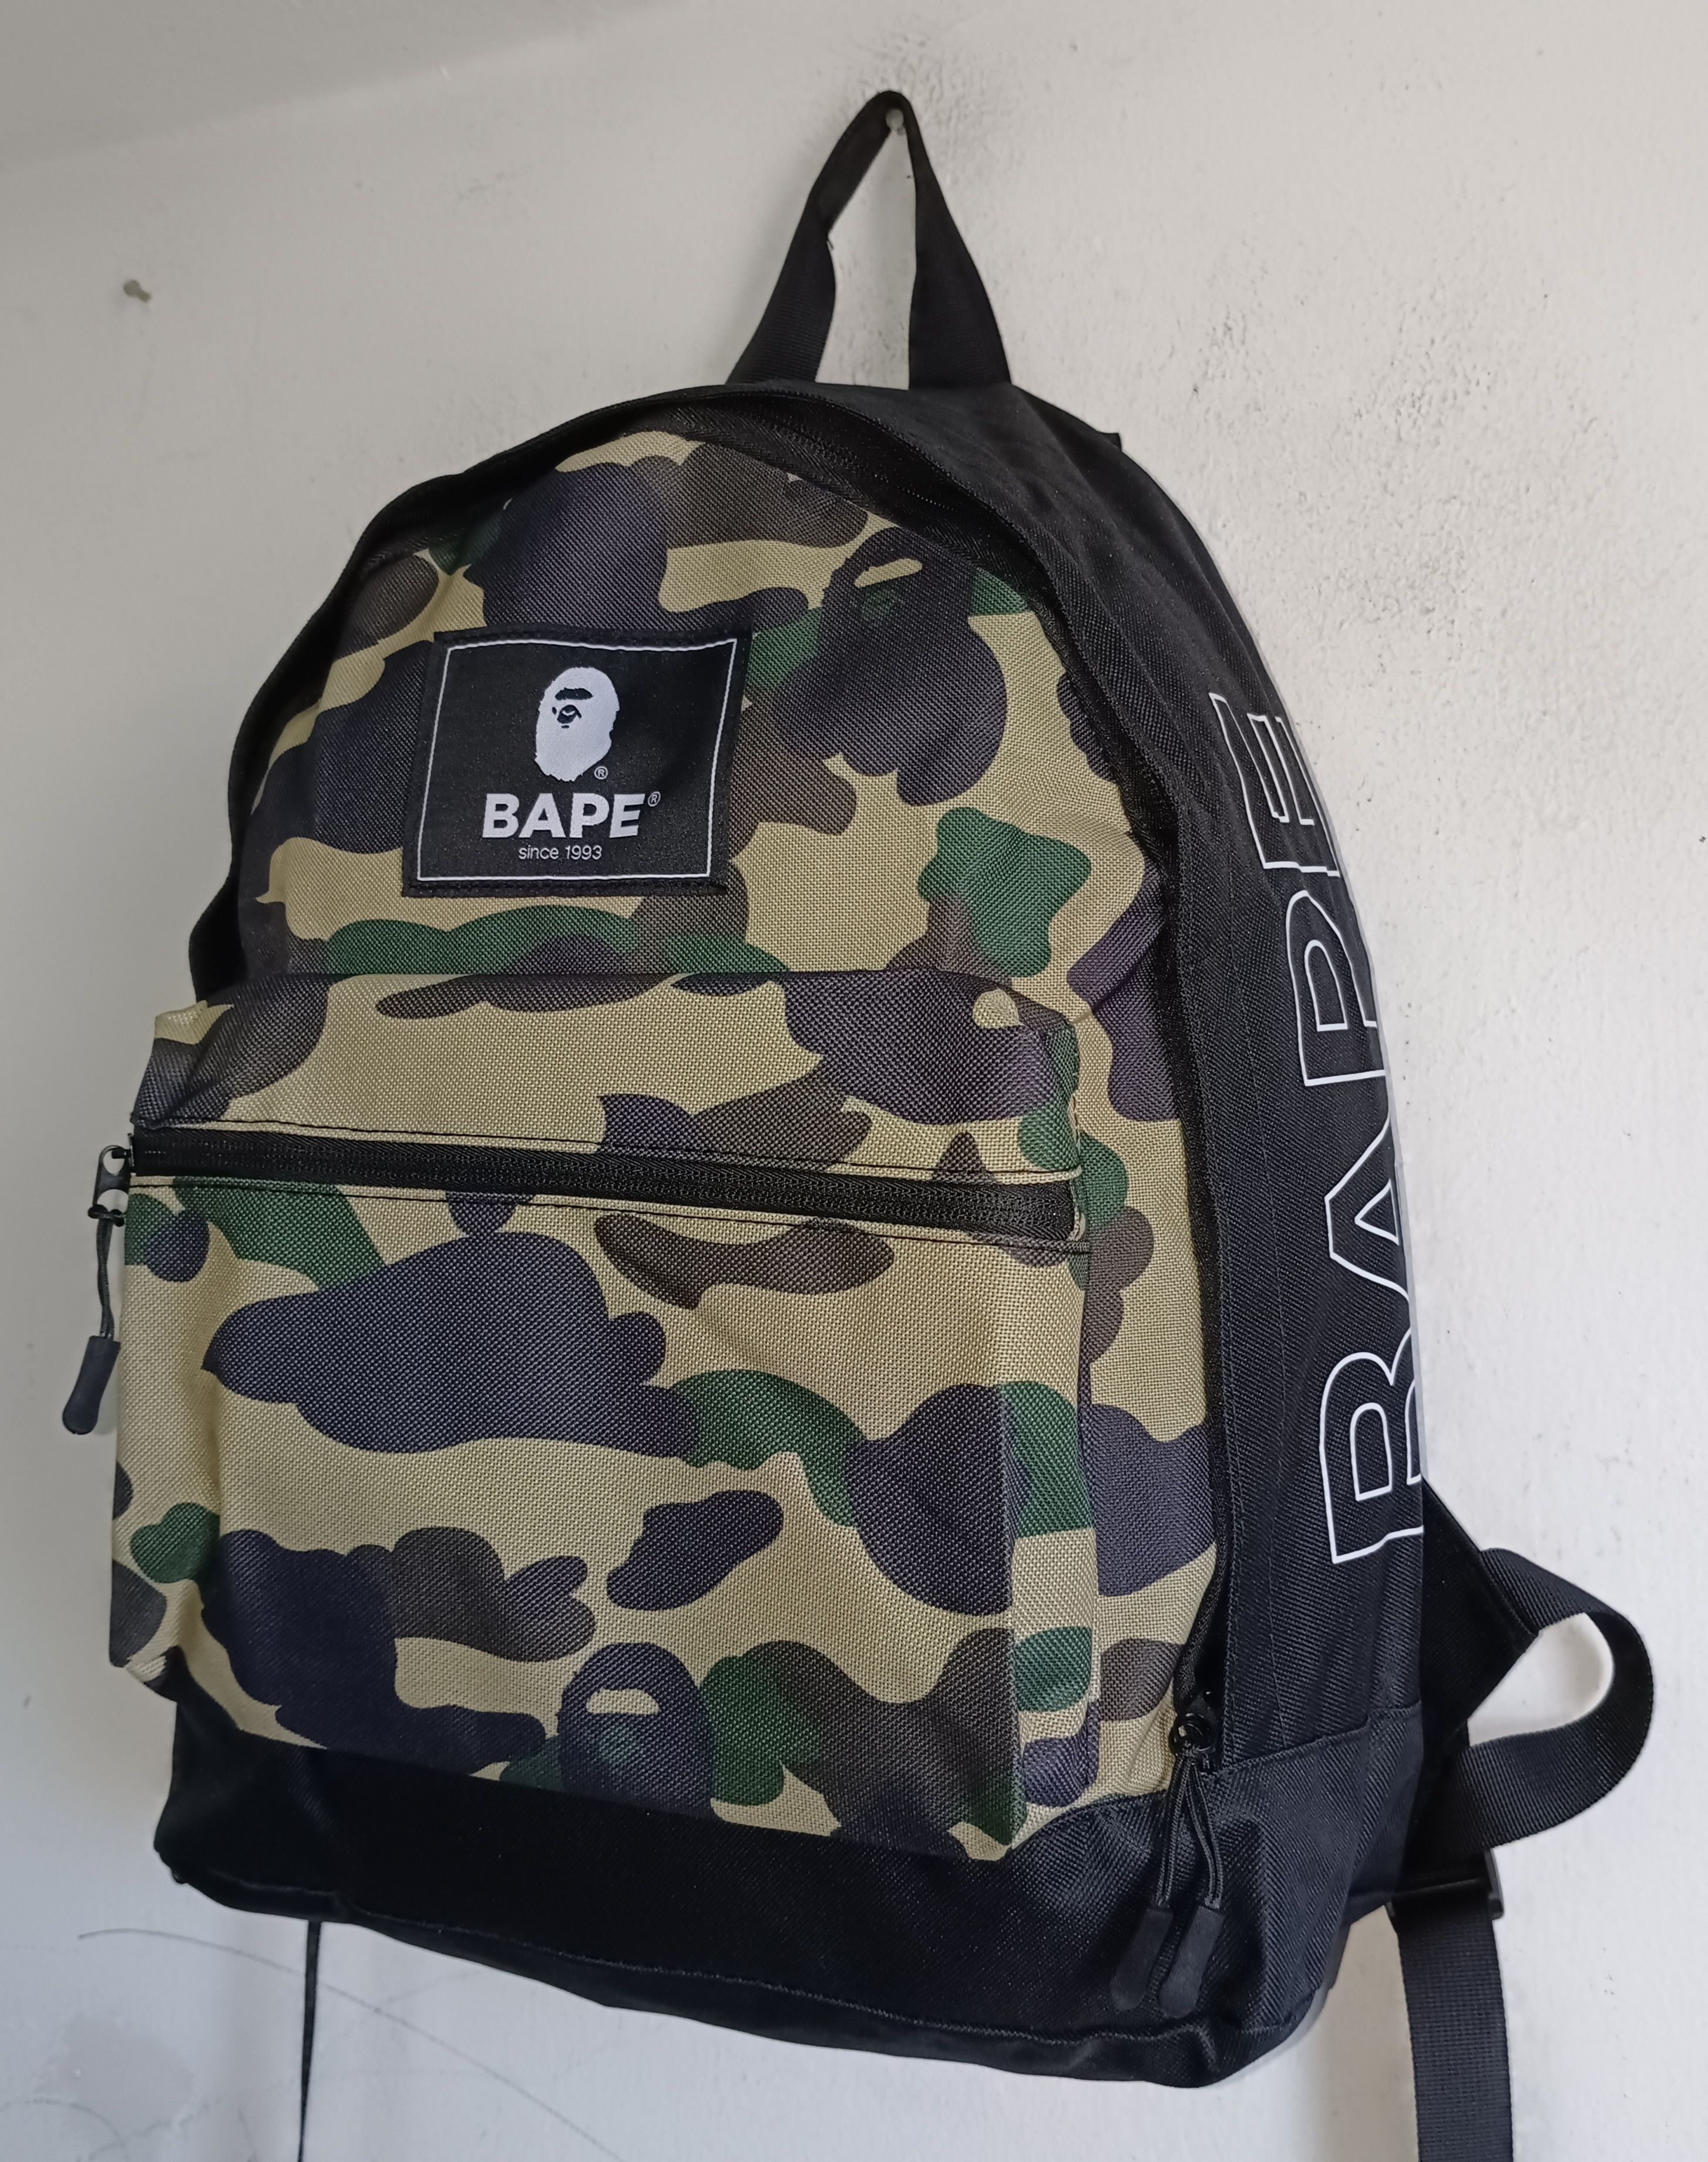 Bape backpack 2021